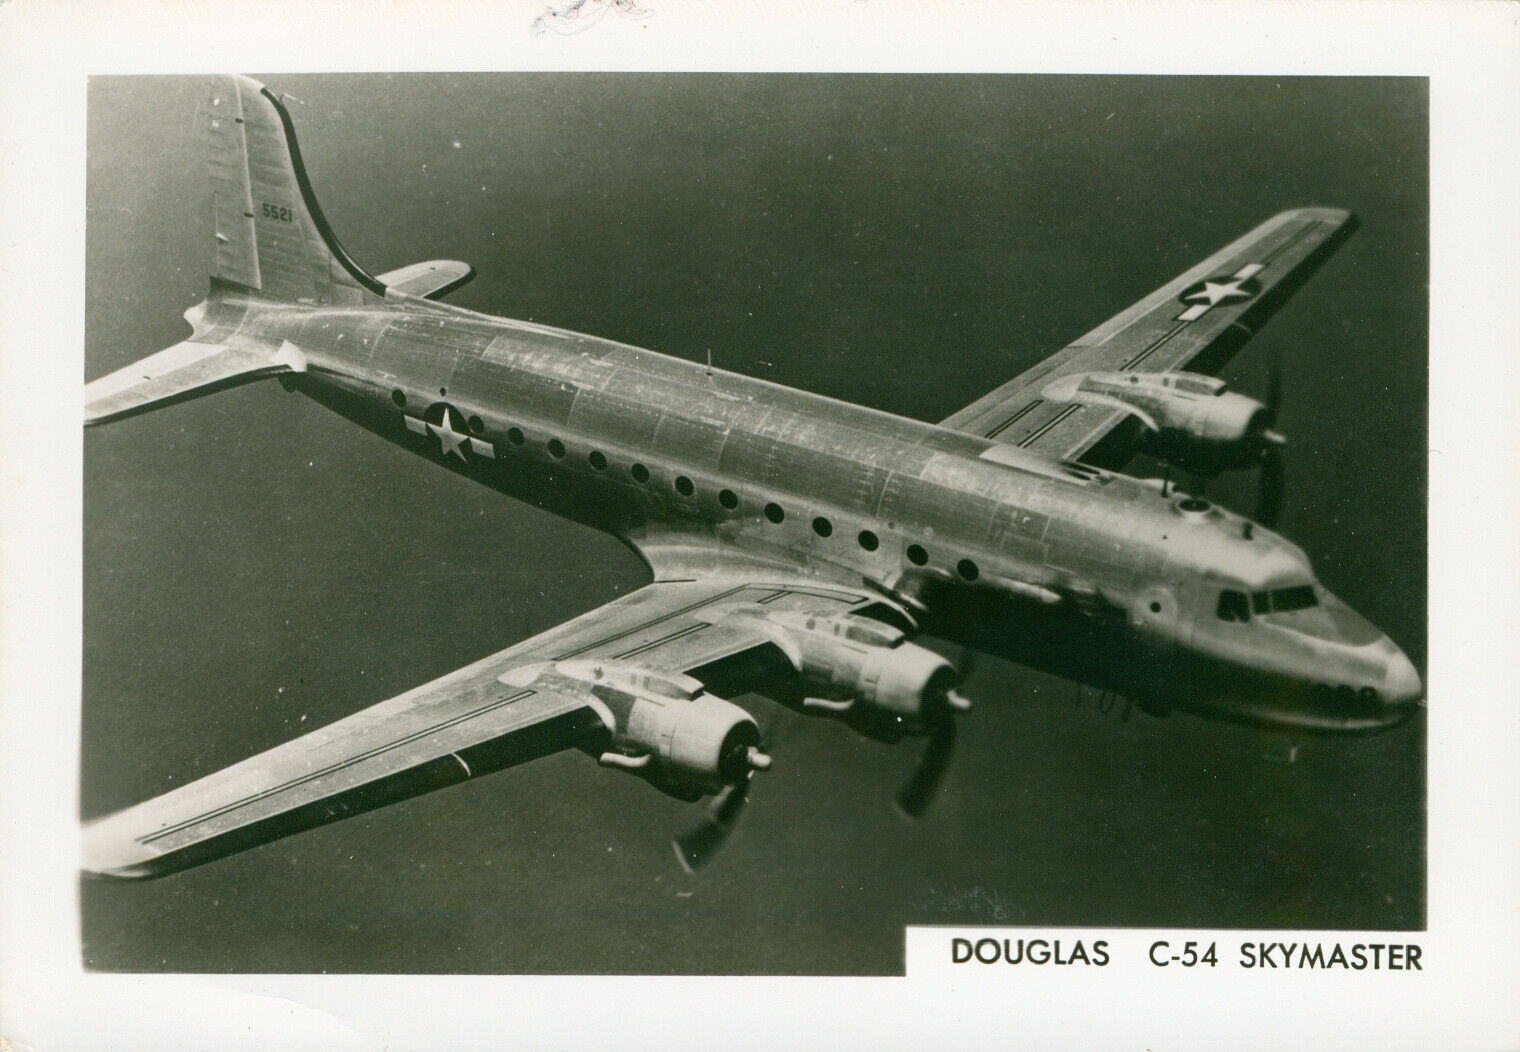 1950s USA aircraft Photo Douglas C-54 Skymaster Airplane in flight